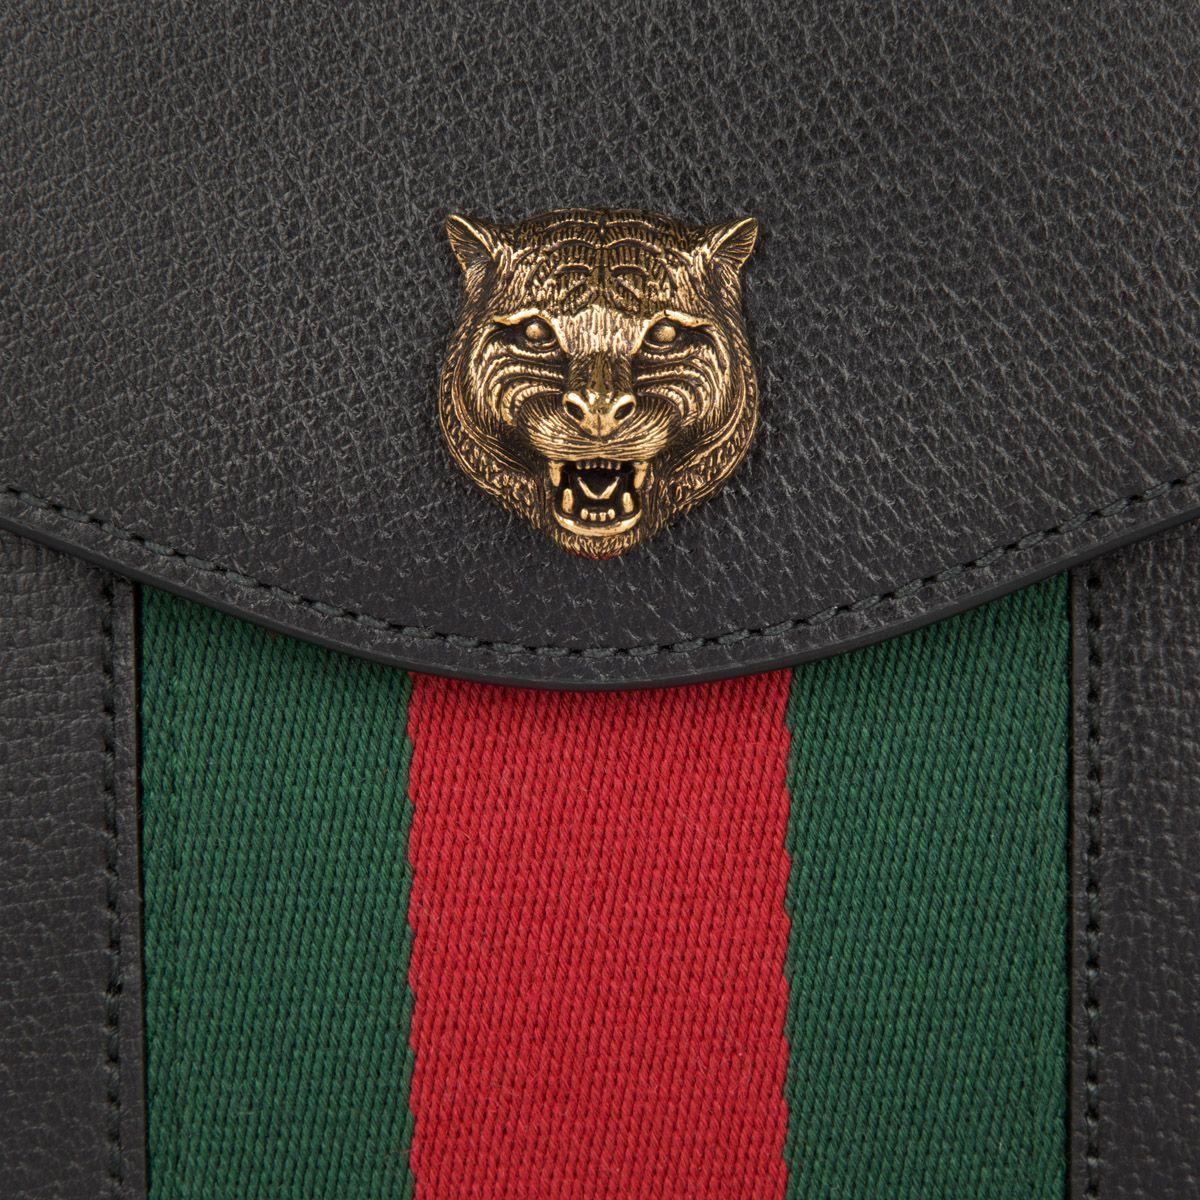 Gucci Lion Logo - Gucci Lion Leather Crossbody Bag Black in black